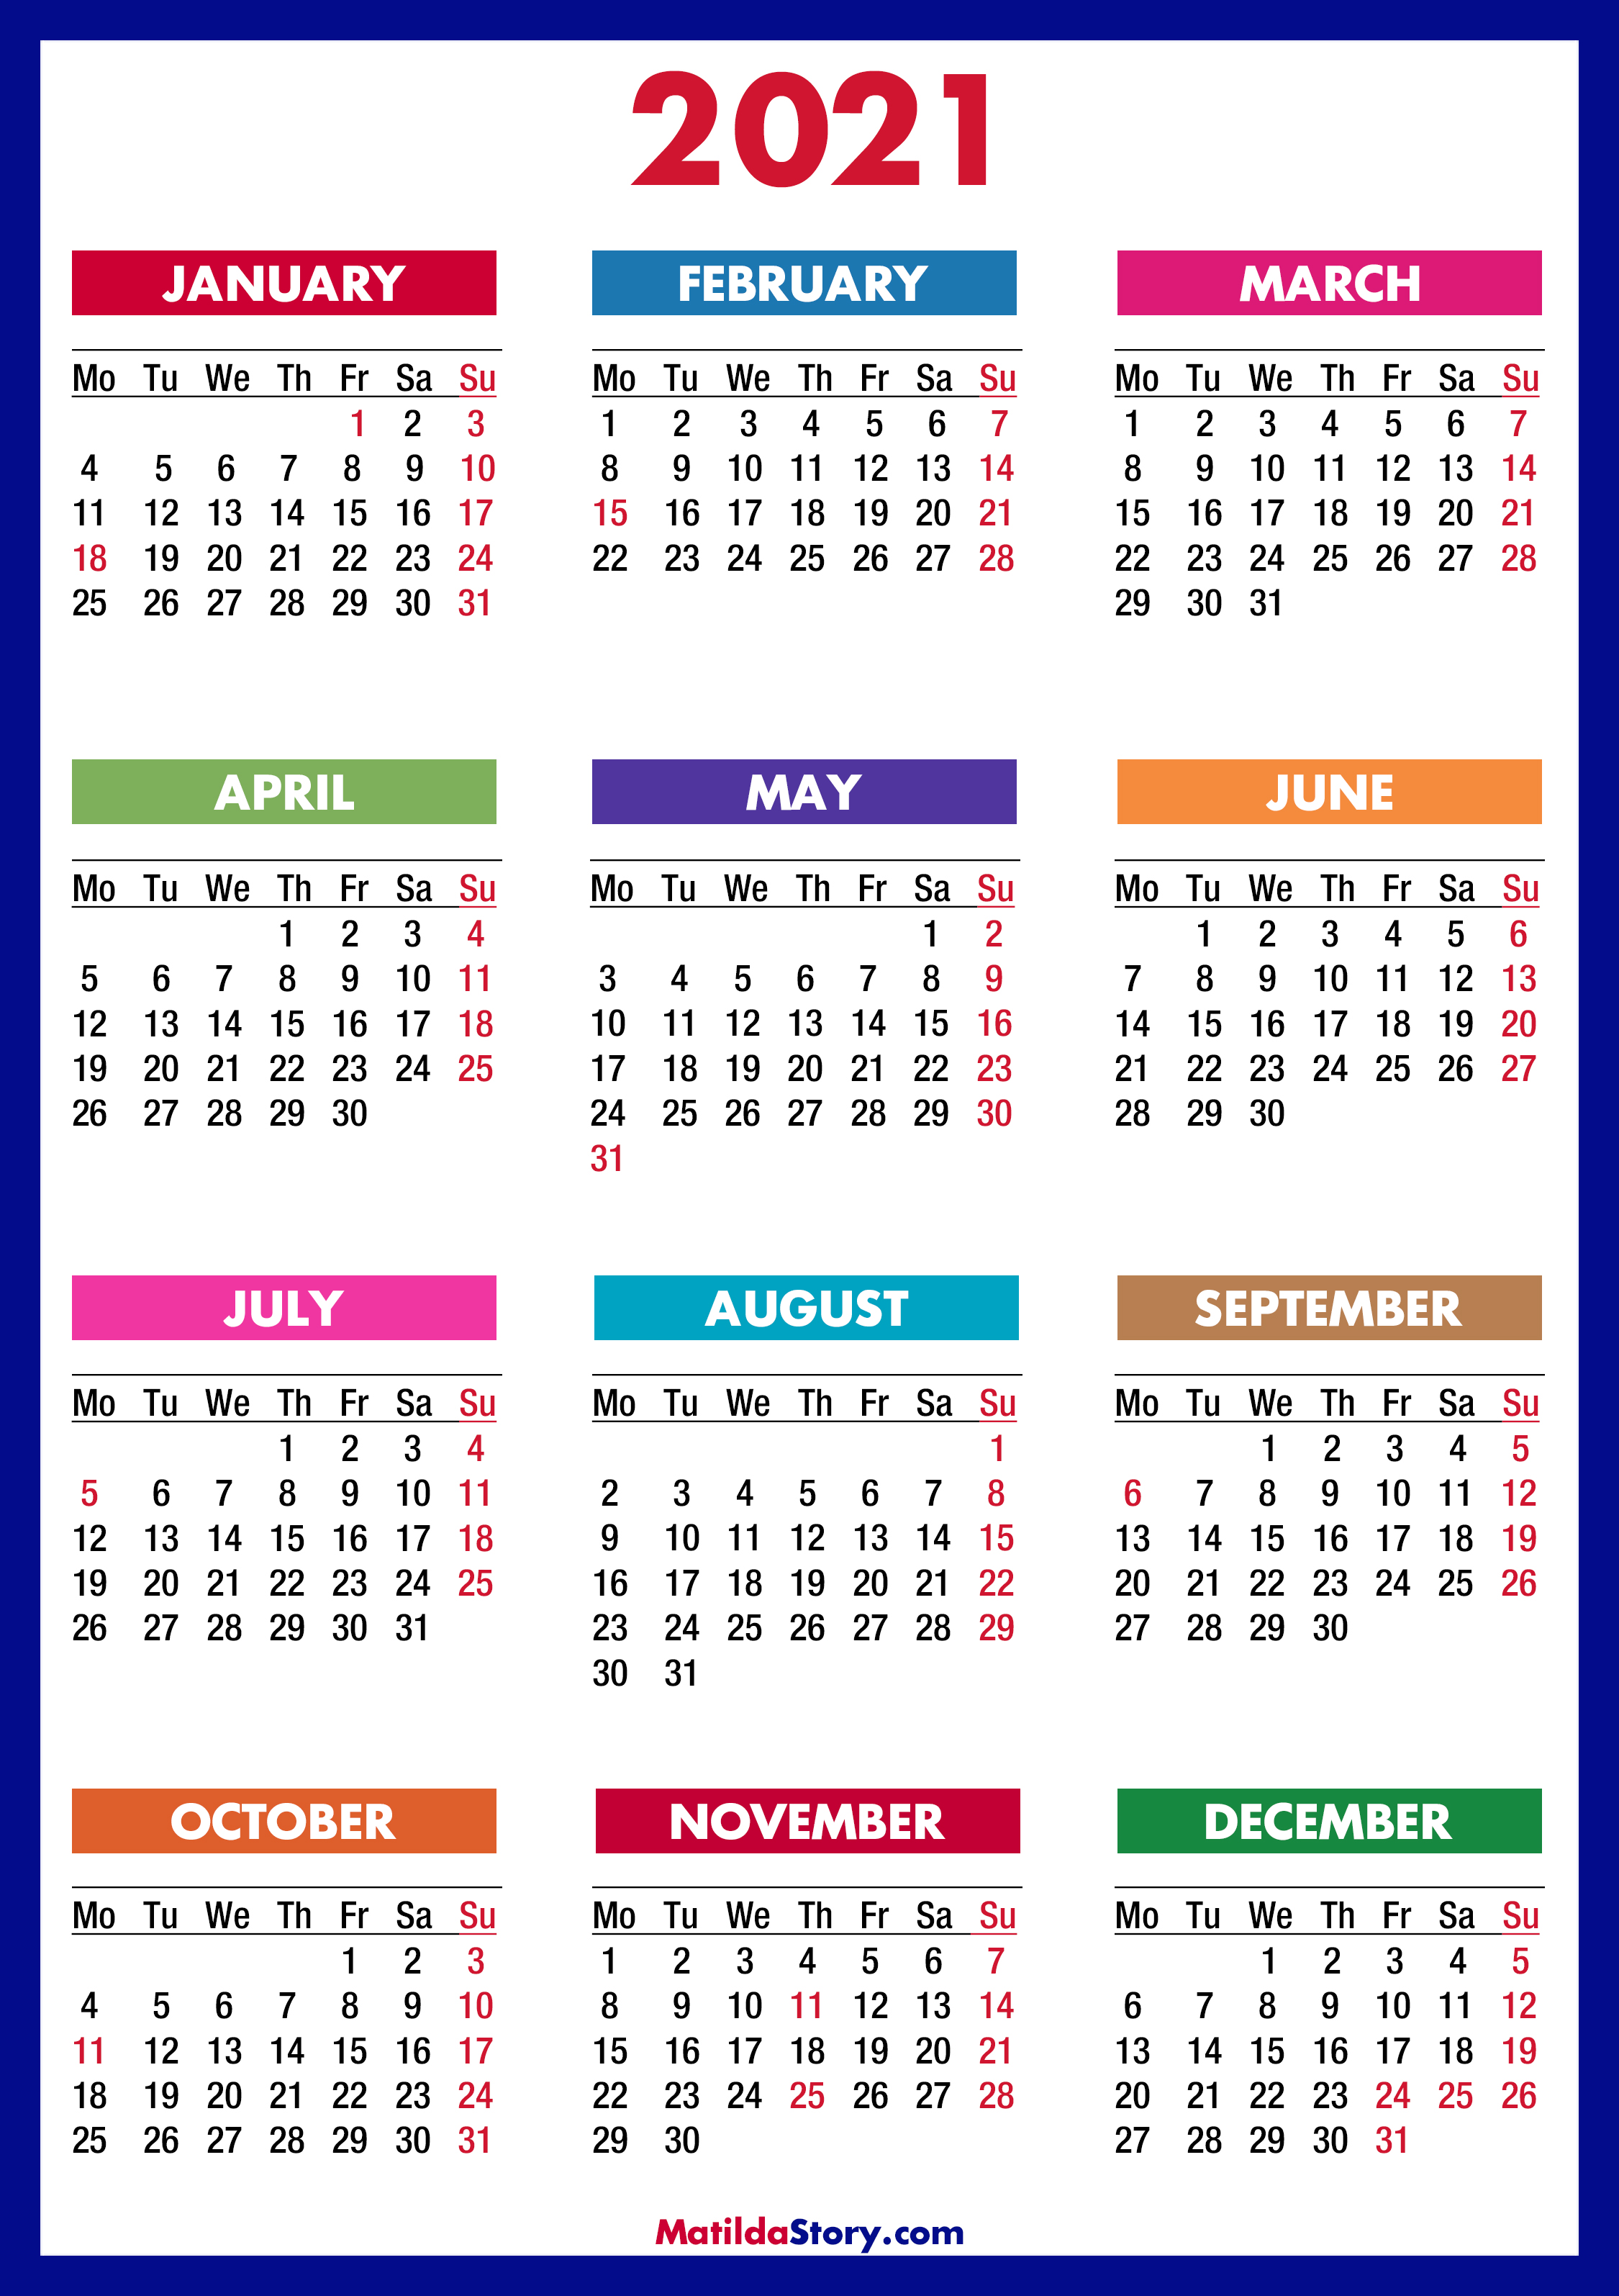 2021 Calendar With Holidays - January 2021